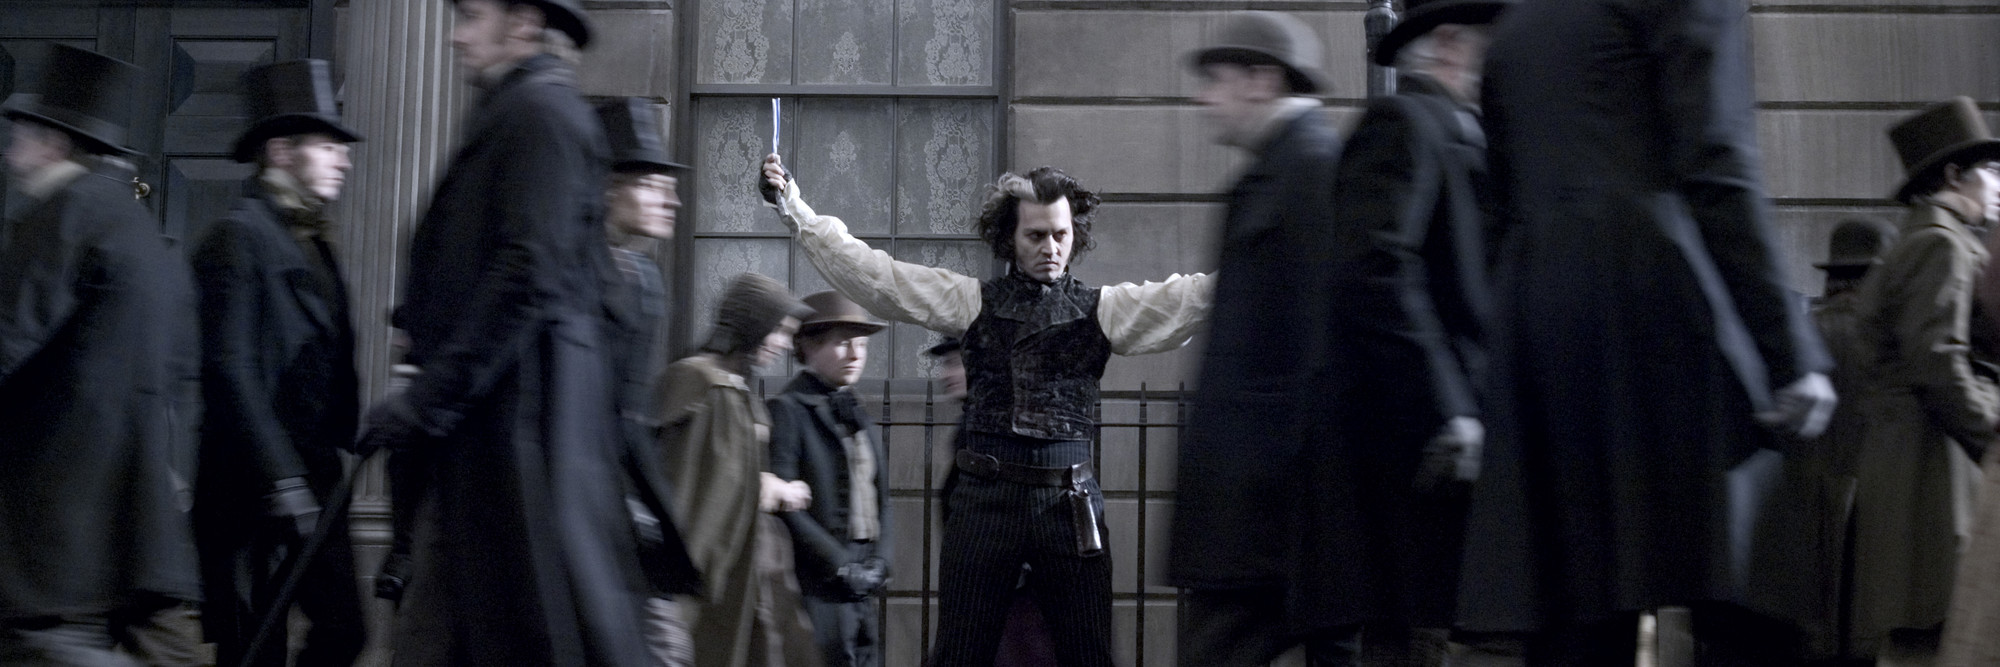 Sweeney Todd, the Demon Barber of Fleet Street. 2007. USA/Great Britain. Directed by Tim Burton